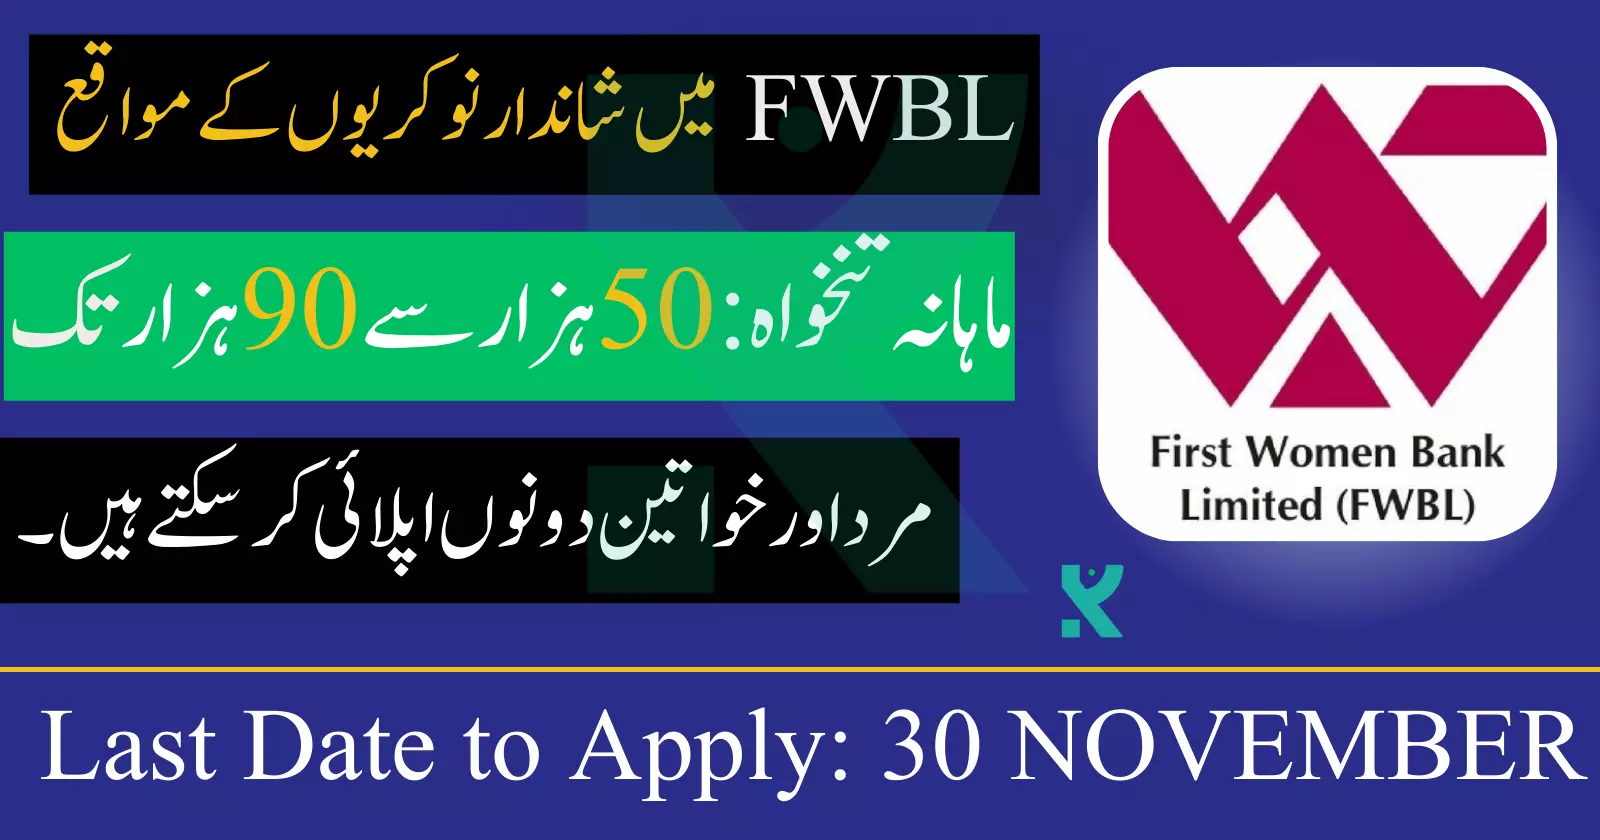 First Women Bank Limited Karachi Hiring Exciting Career Opportunities in FWBL